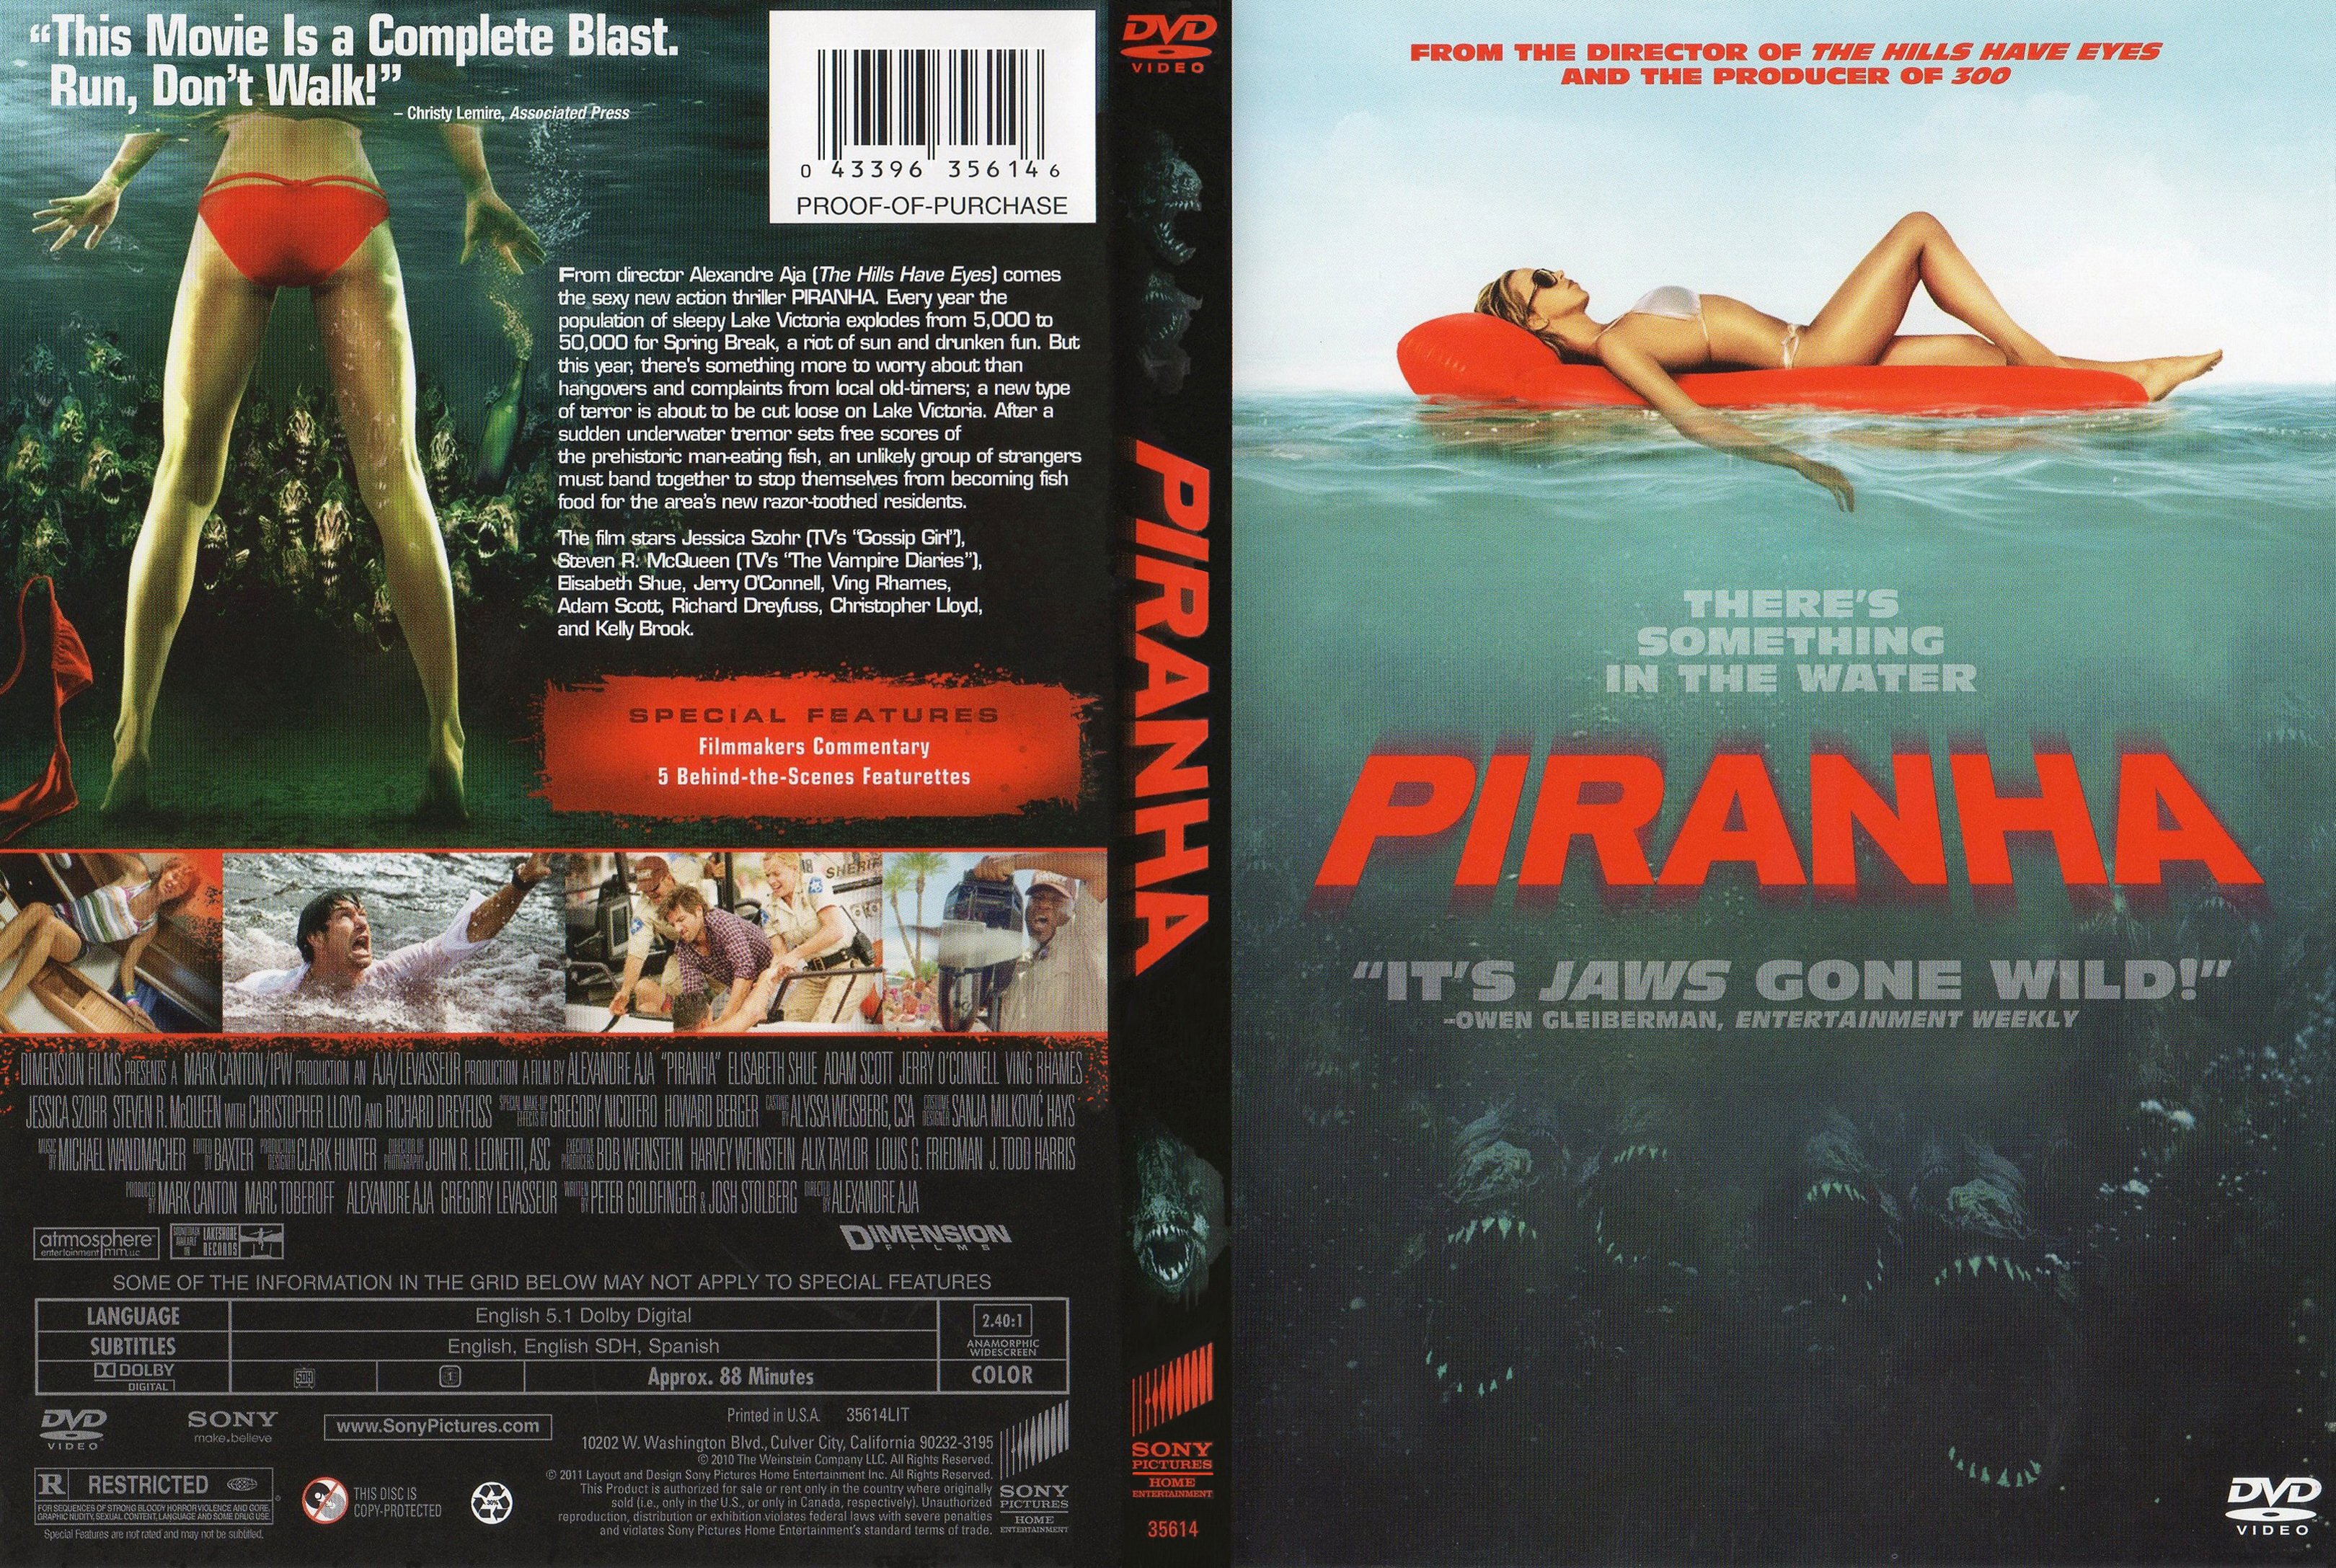 Слушать книгу пиранья. Piranha DVD Cover. Пиранья кодекс одиночки. Piranha DVD Cover 1981.